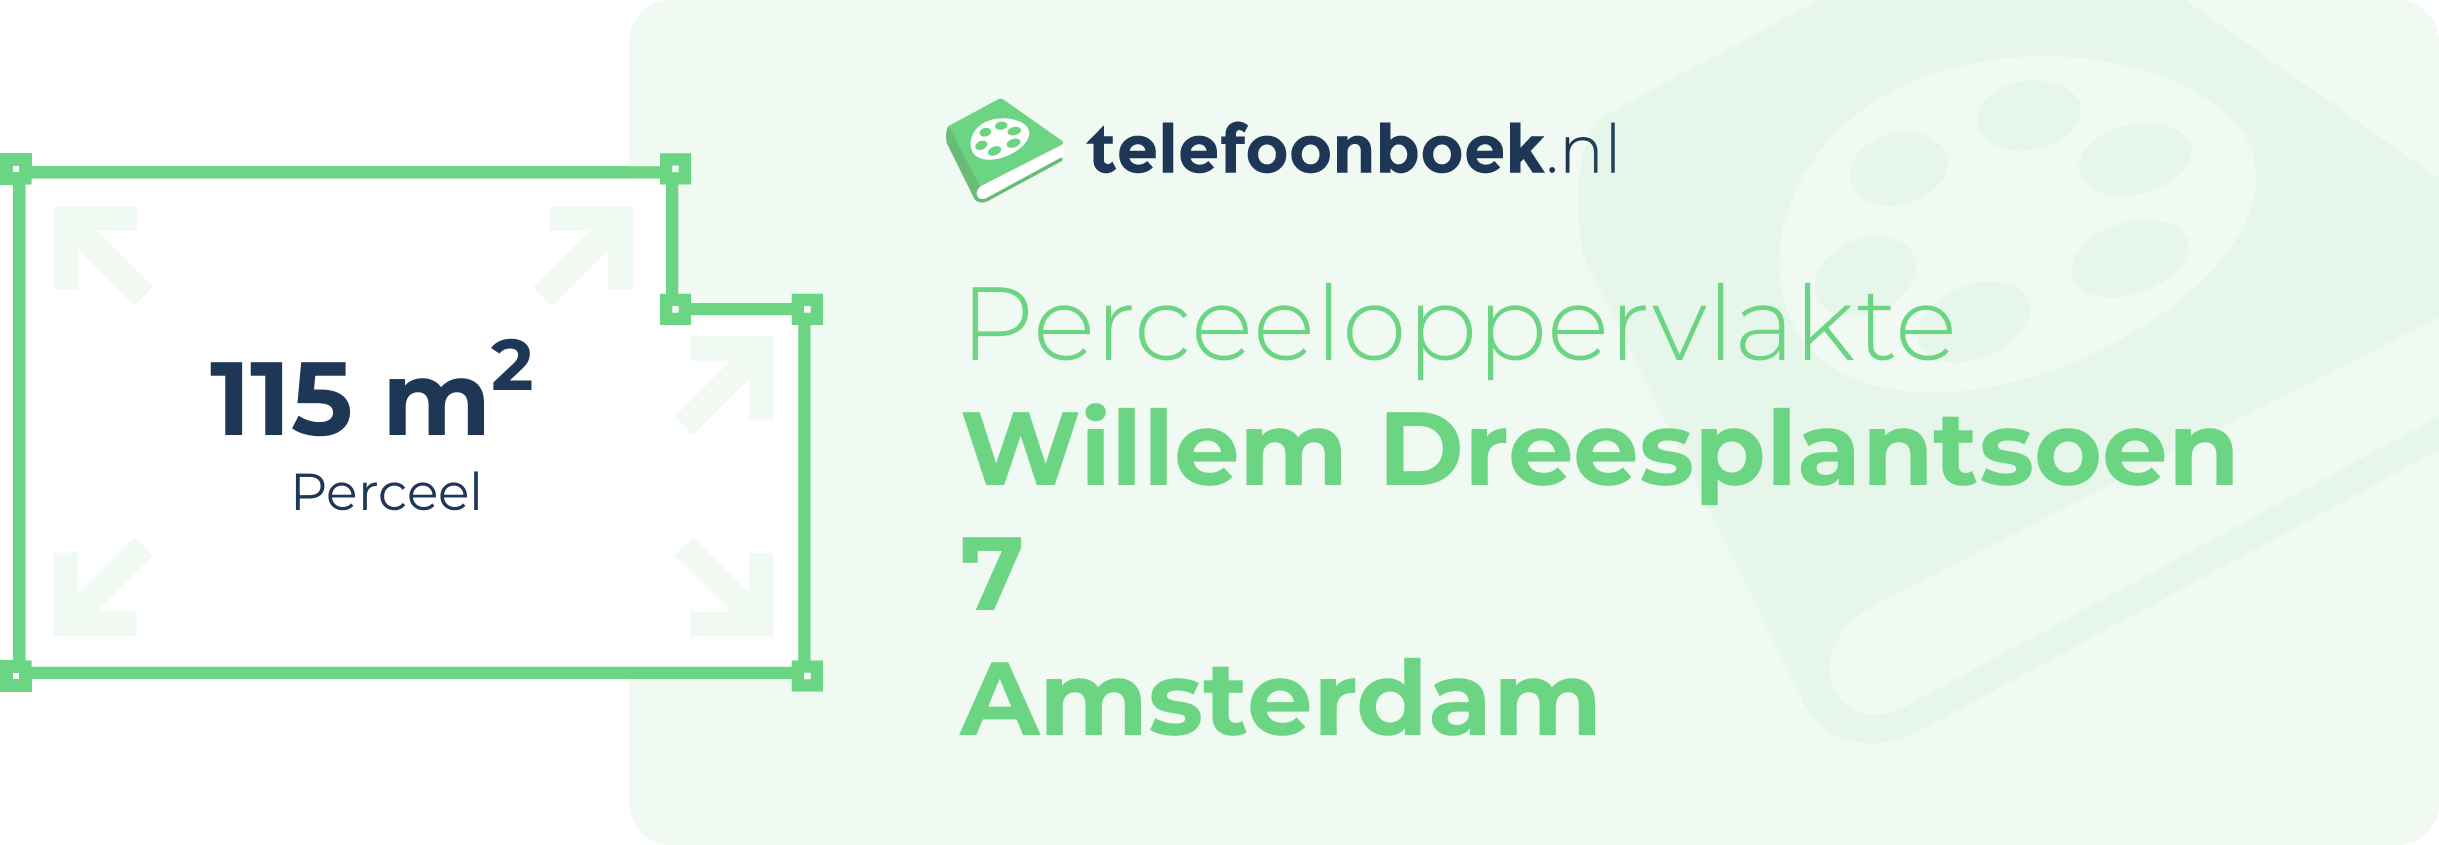 Perceeloppervlakte Willem Dreesplantsoen 7 Amsterdam